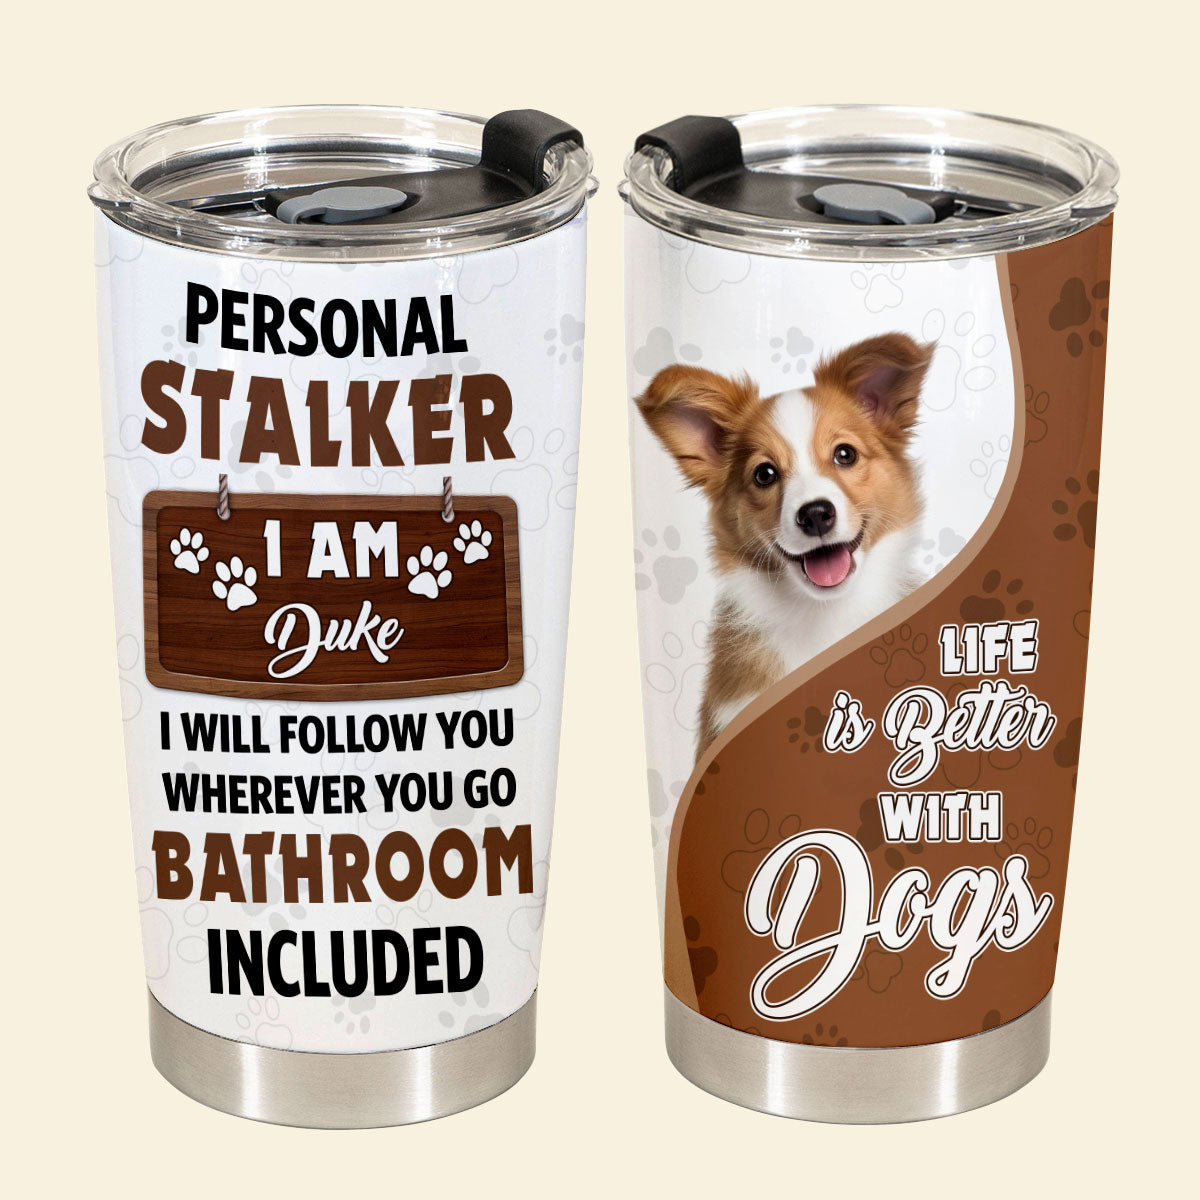 Personal Stalker - Personalized Custom Dog Photo Tumbler